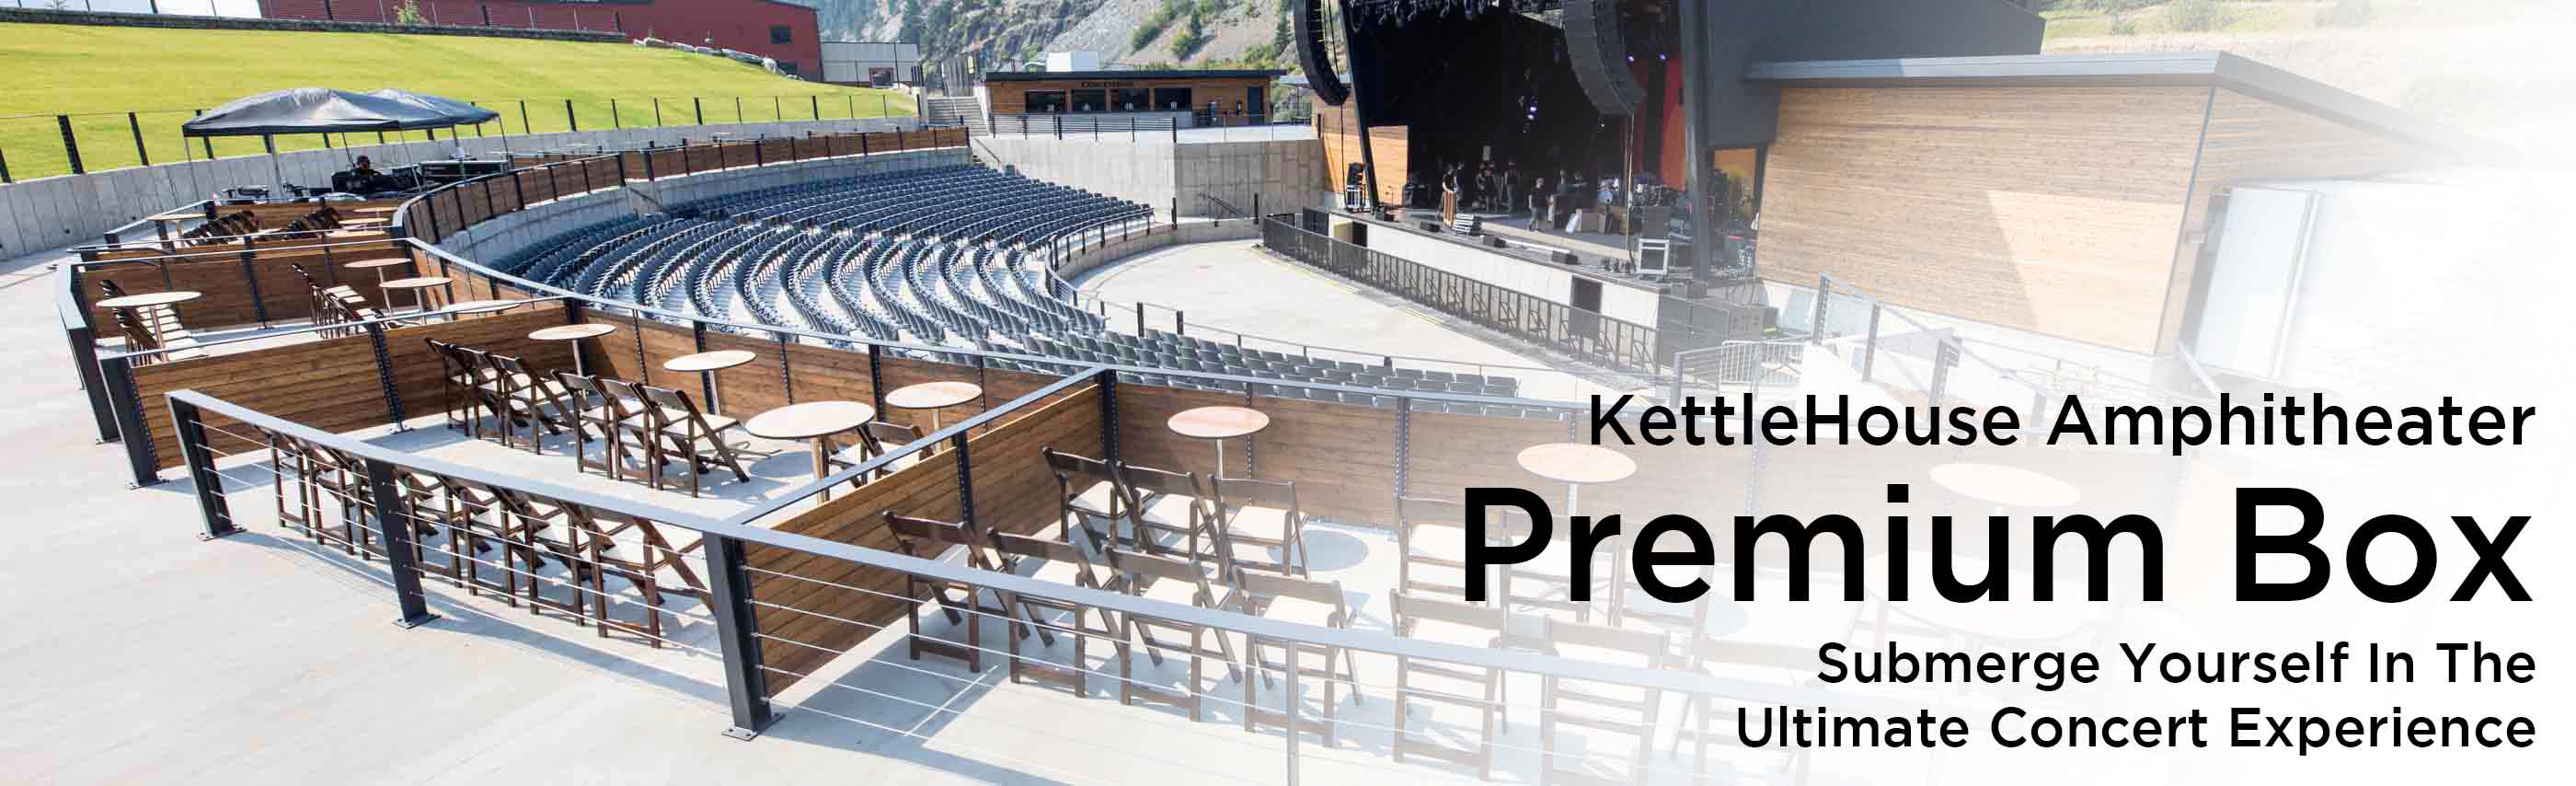 KettleHouse Amphitheater Premium Boxes